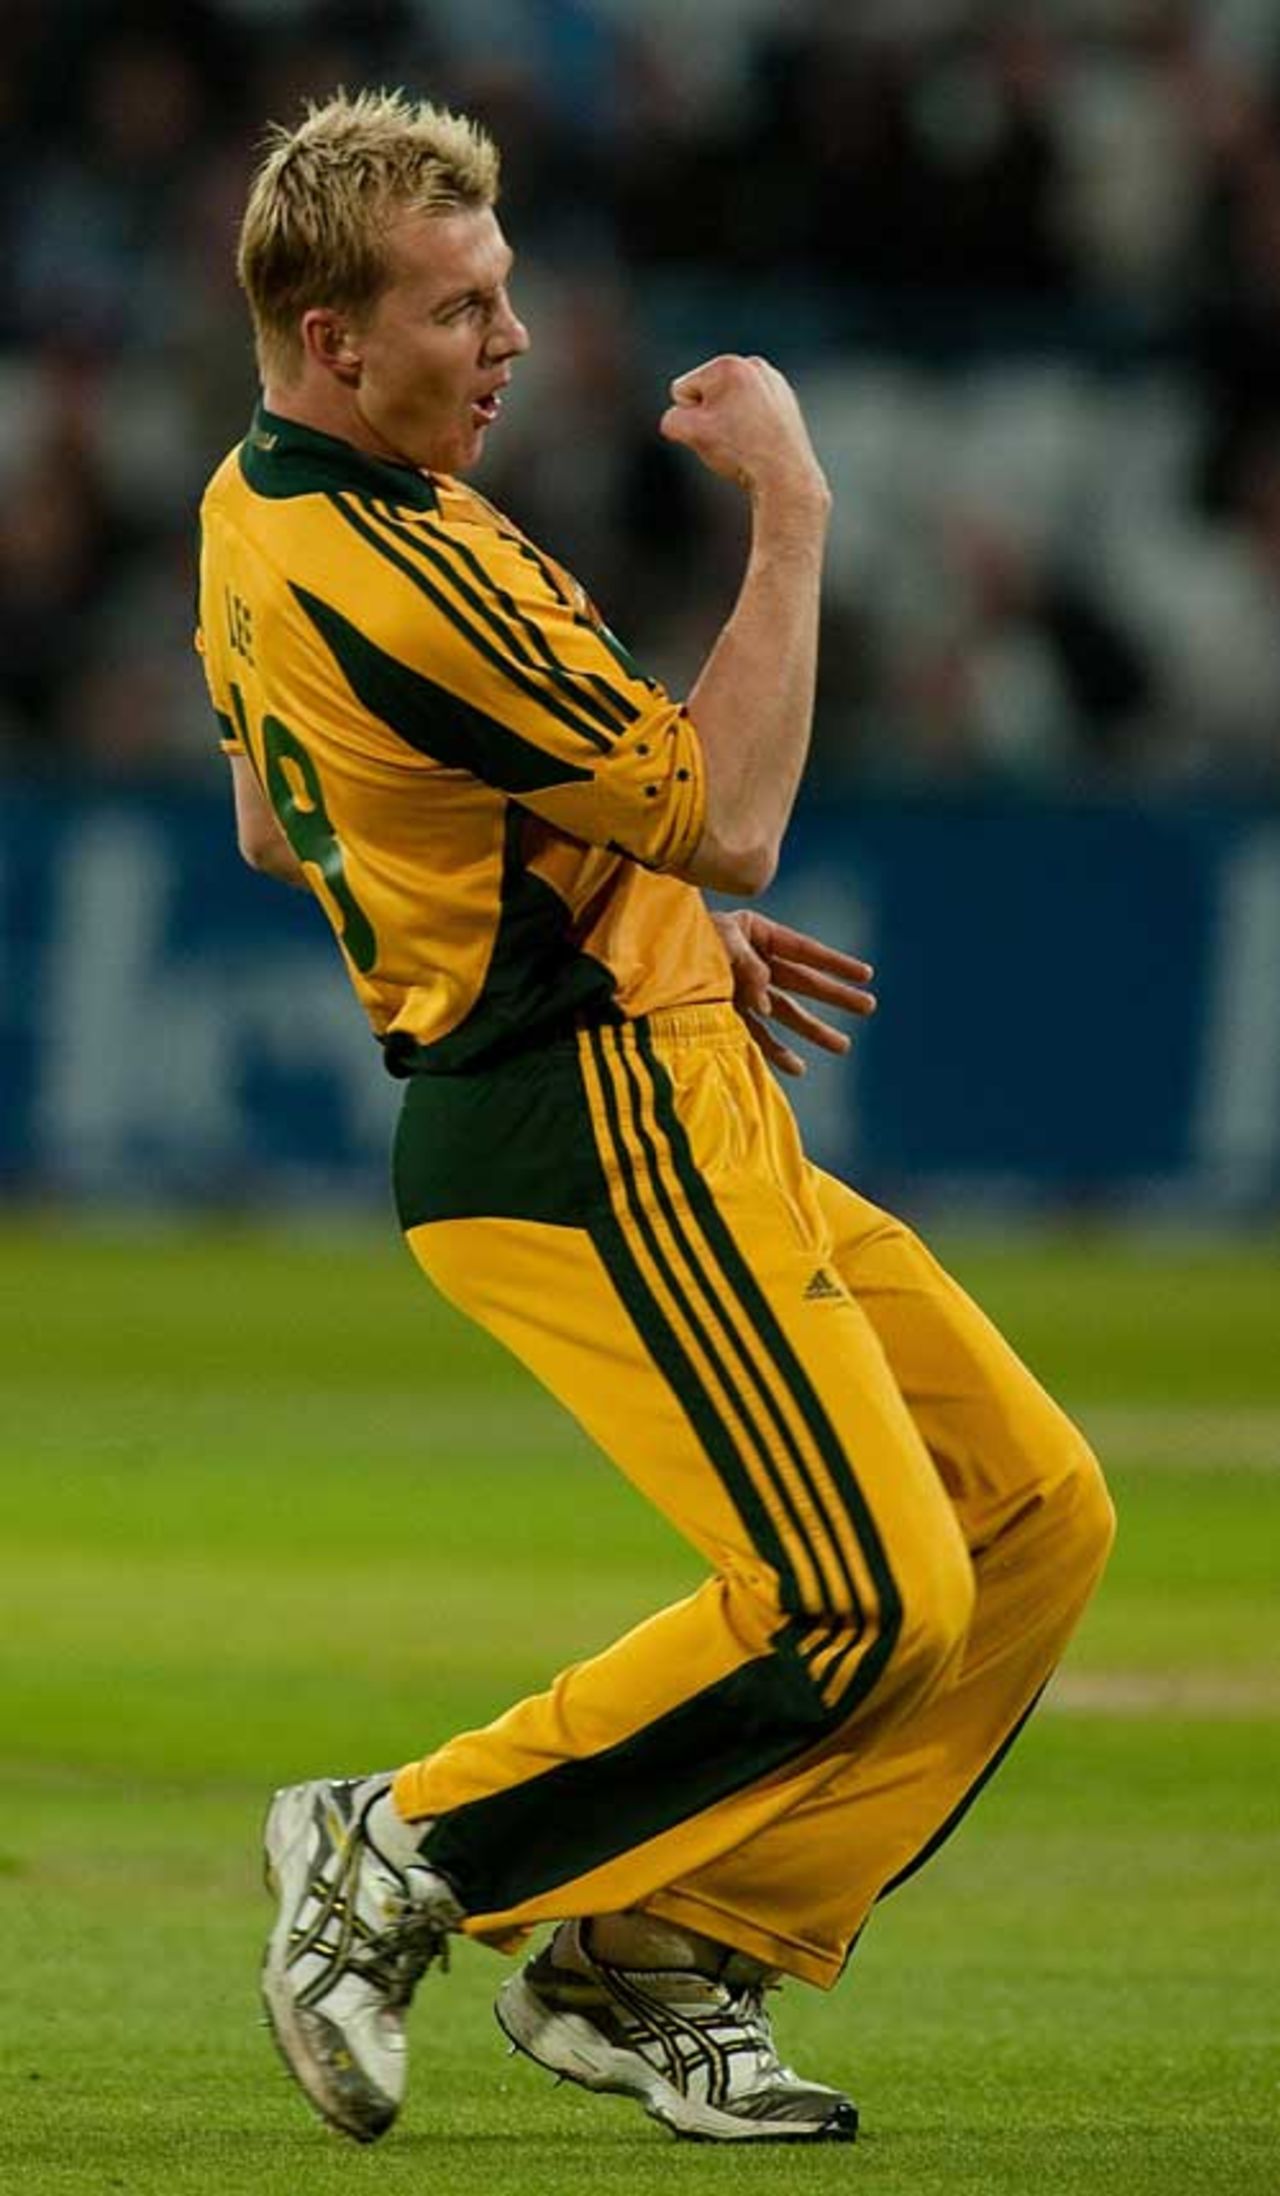 Brett Lee is pumped after removing Andrew Strauss, England v Australia, 6th ODI, Trent Bridge, September 17, 2009